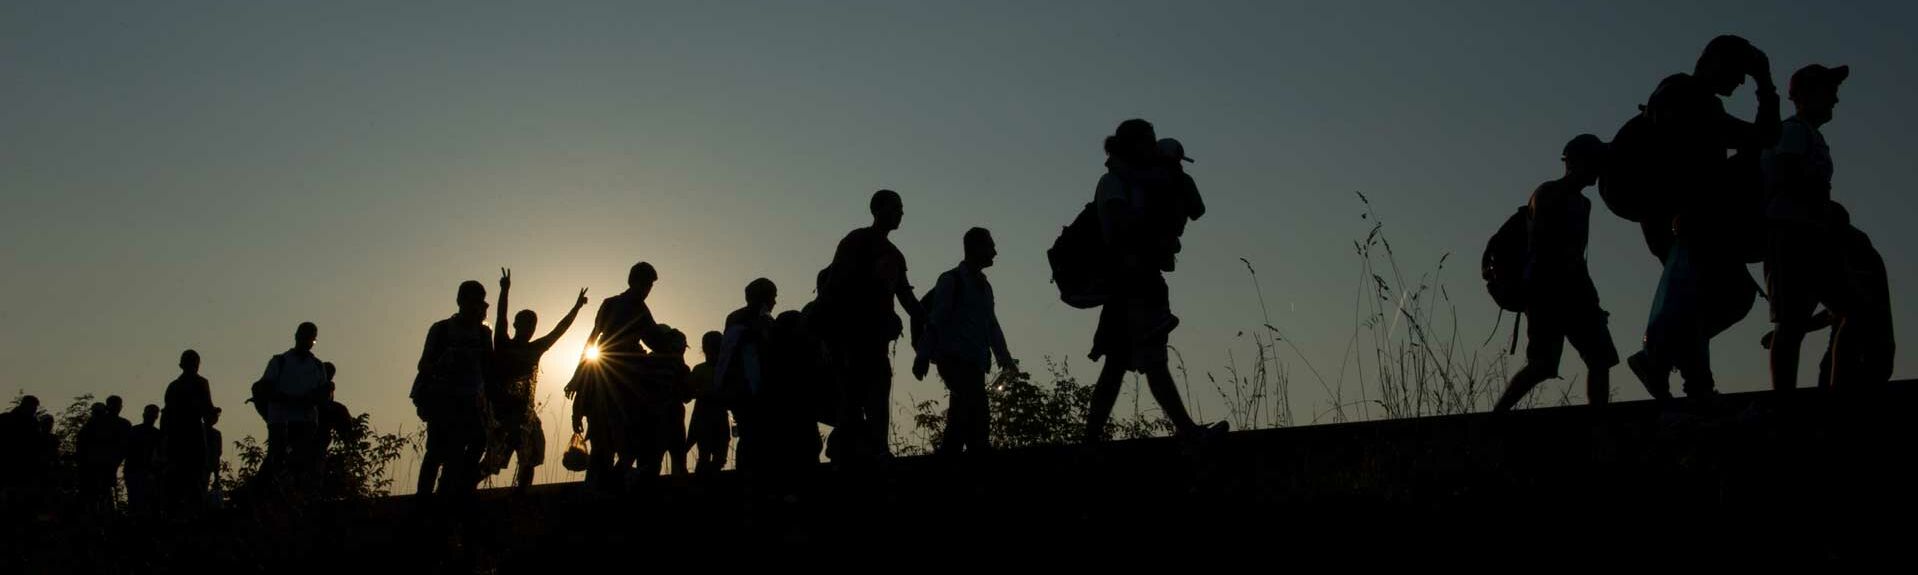 Flüchtlinge im Sonnenuntergang